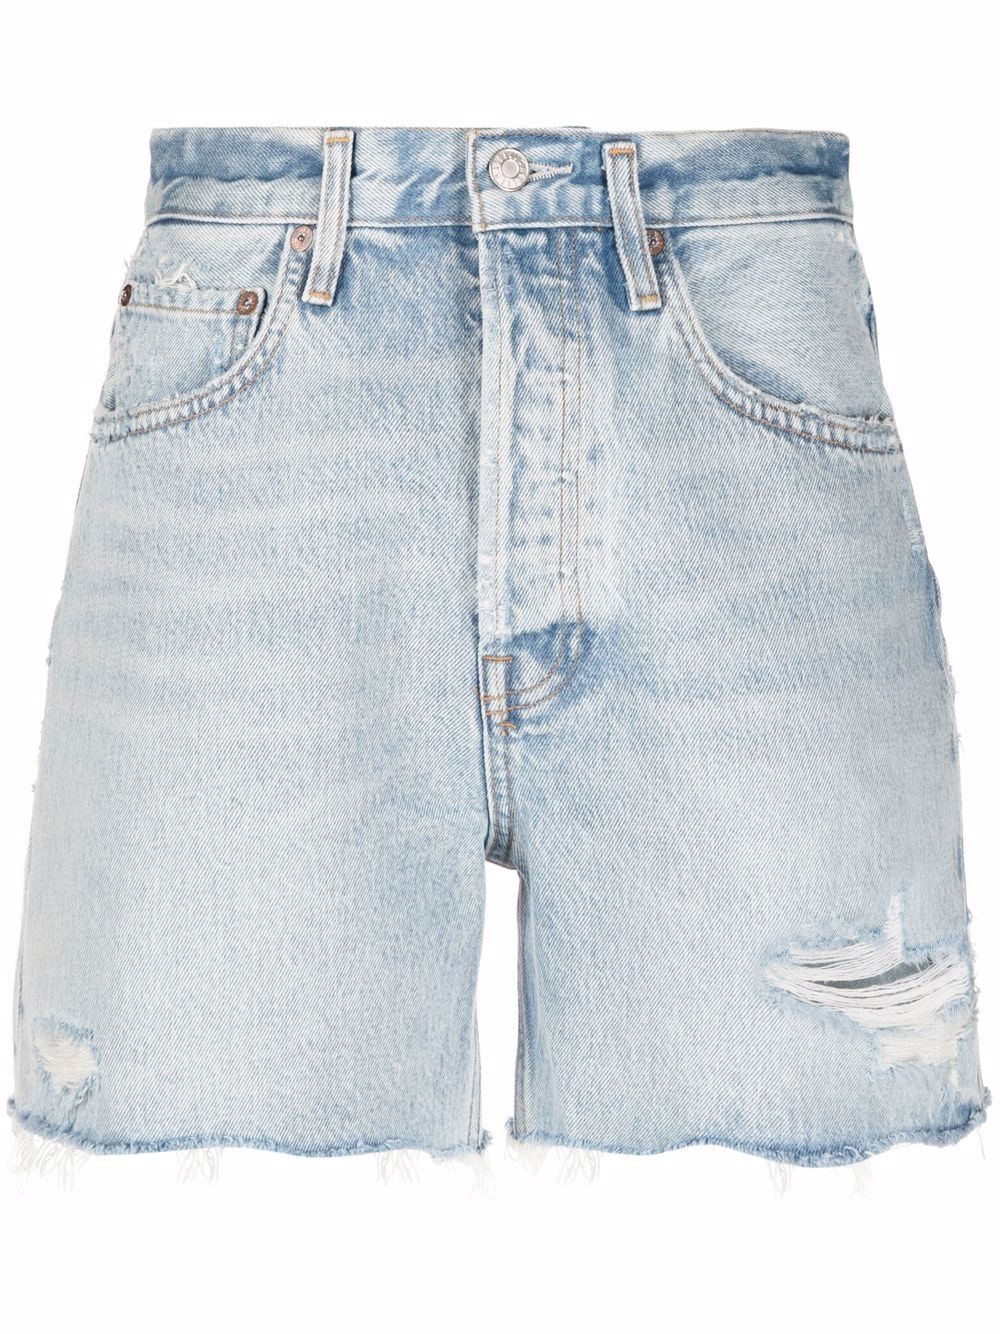 AGOLDE Jeans-Shorts im Distressed-Look - Blau von AGOLDE